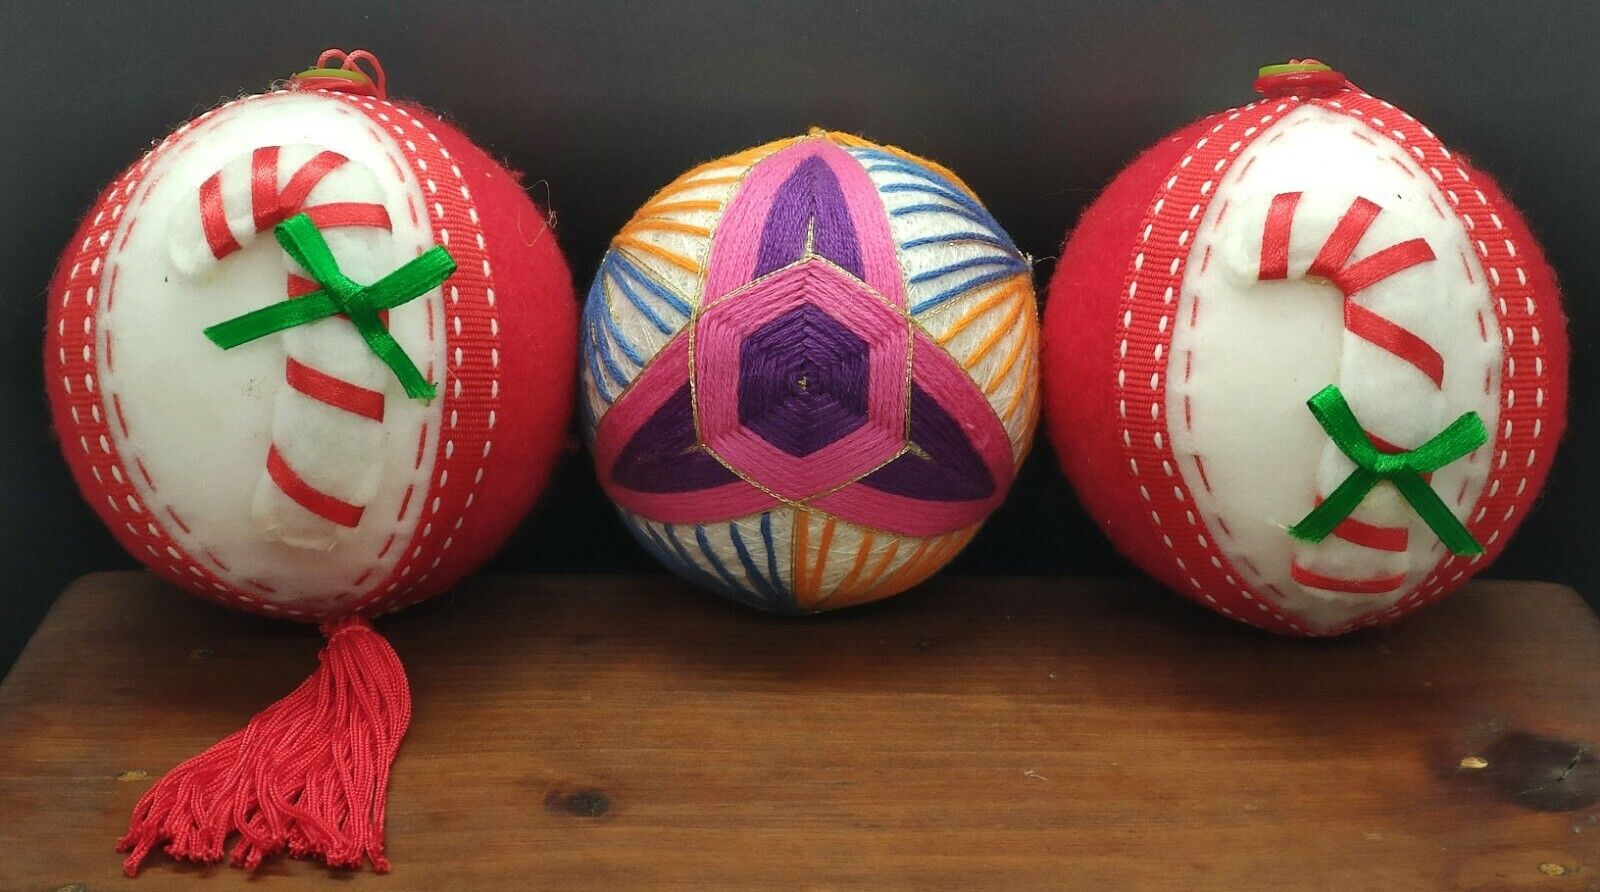 3 Vintage Handmade Ornaments- Felt And Yarn Wrapped Ornaments